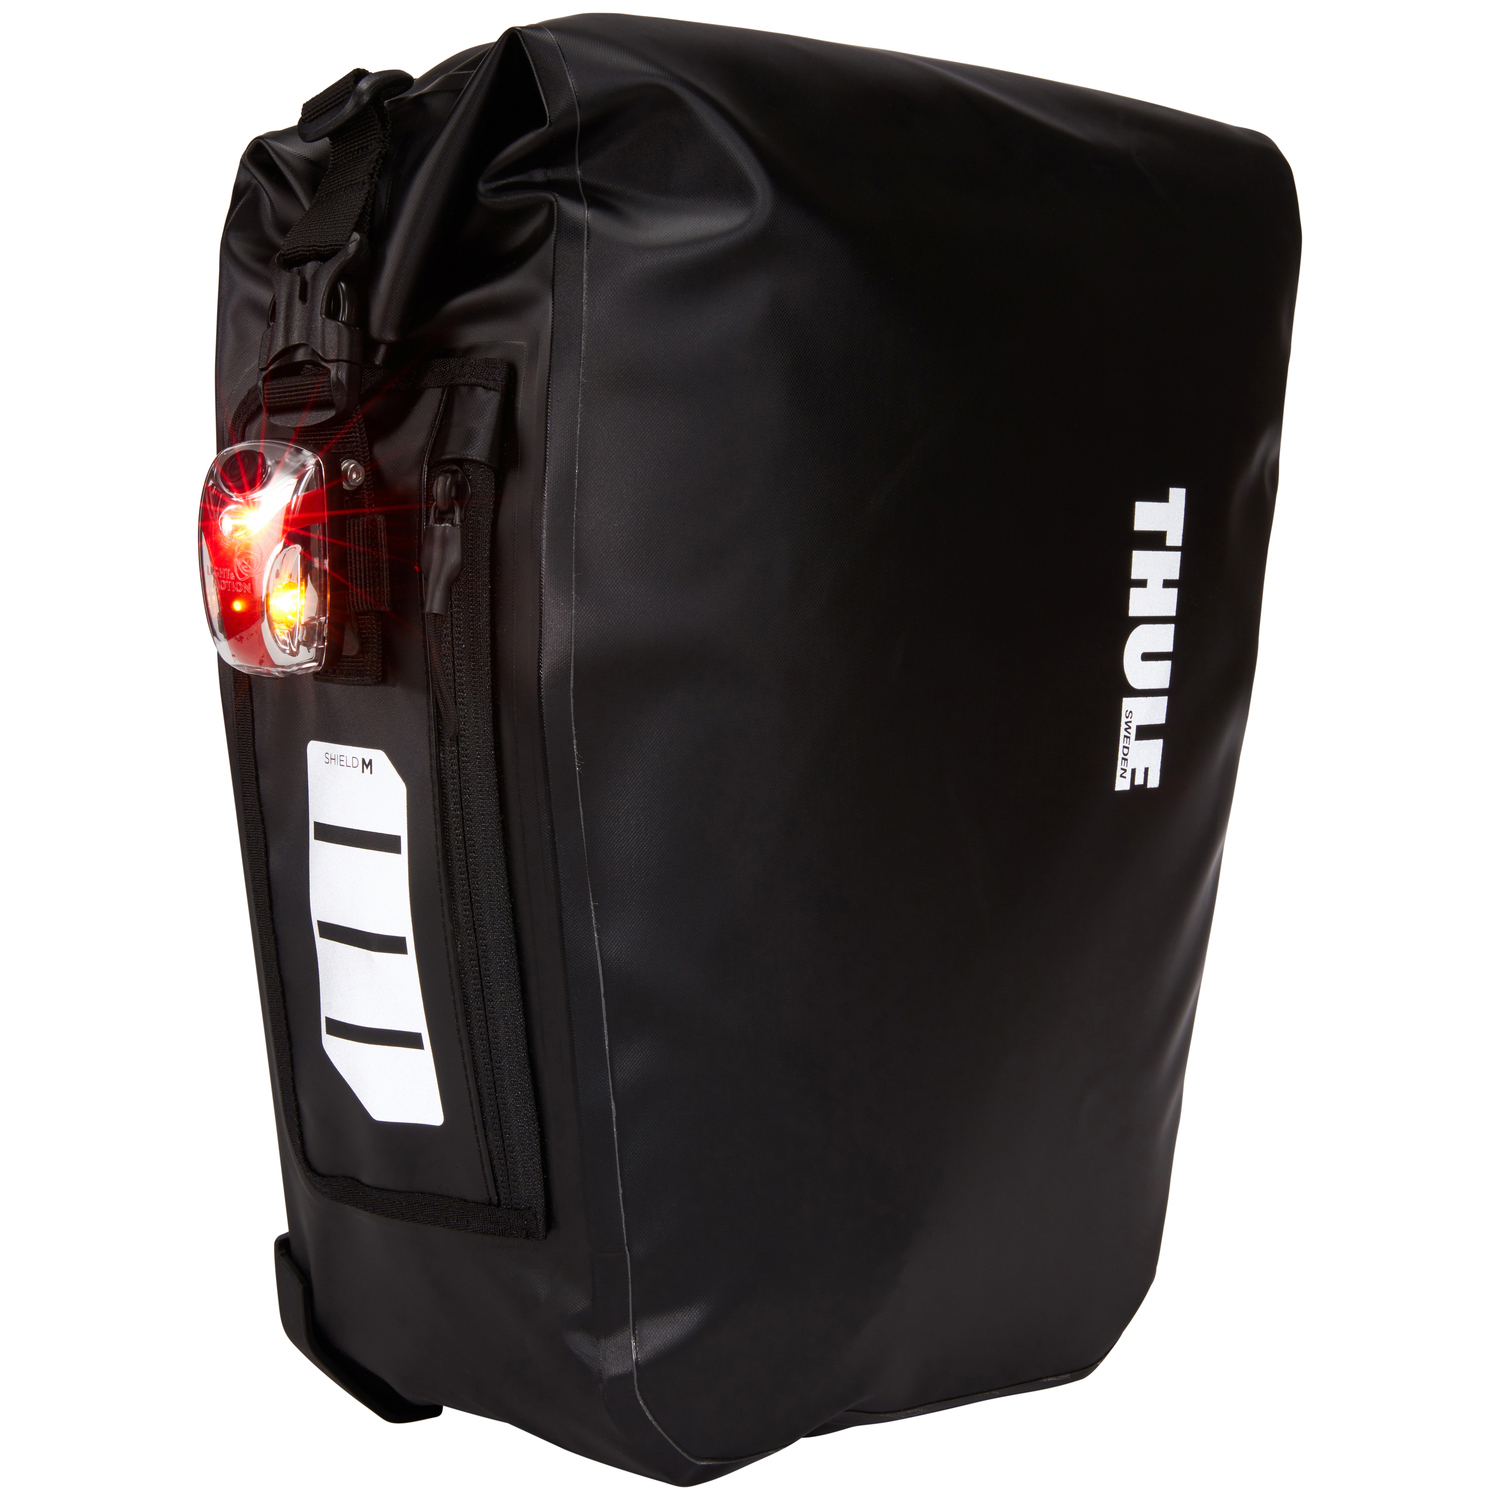 1 Stück Thule Shield Pannier 17L Fahrradtasche Packtasche wasserdicht schwarz